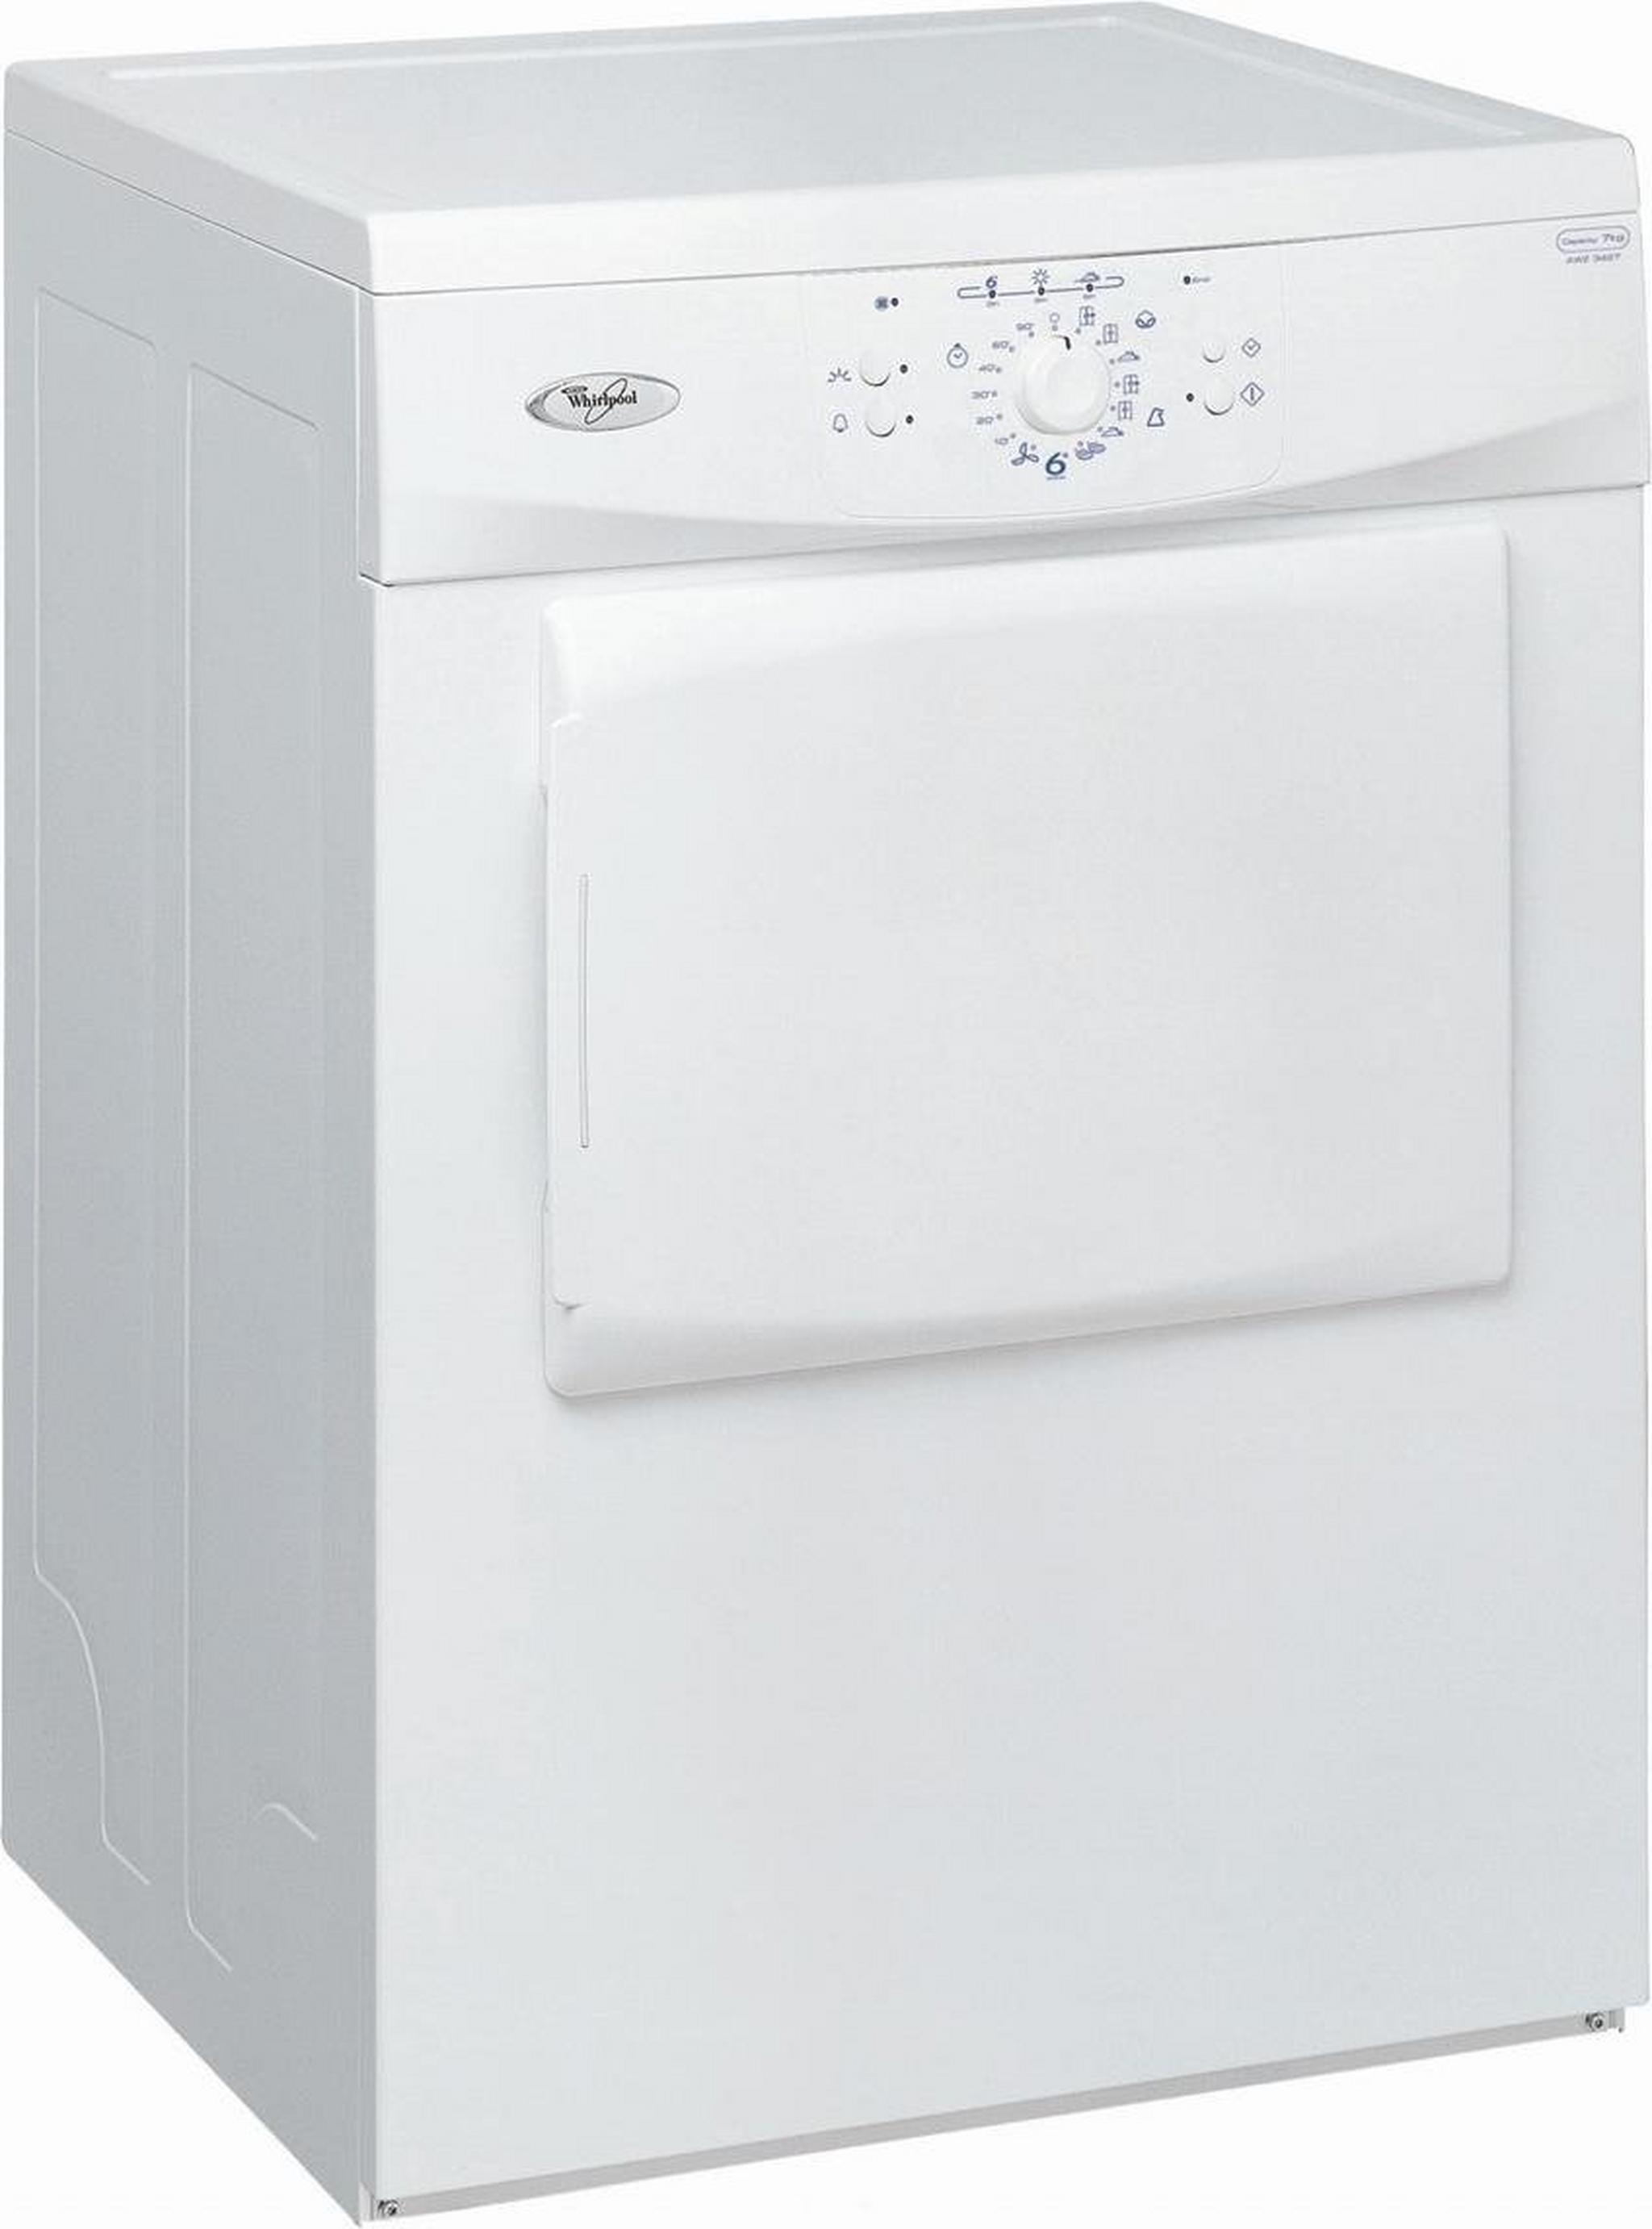 Whirlpool AWZ-3427 Air-Vented Dryer 7kg - White